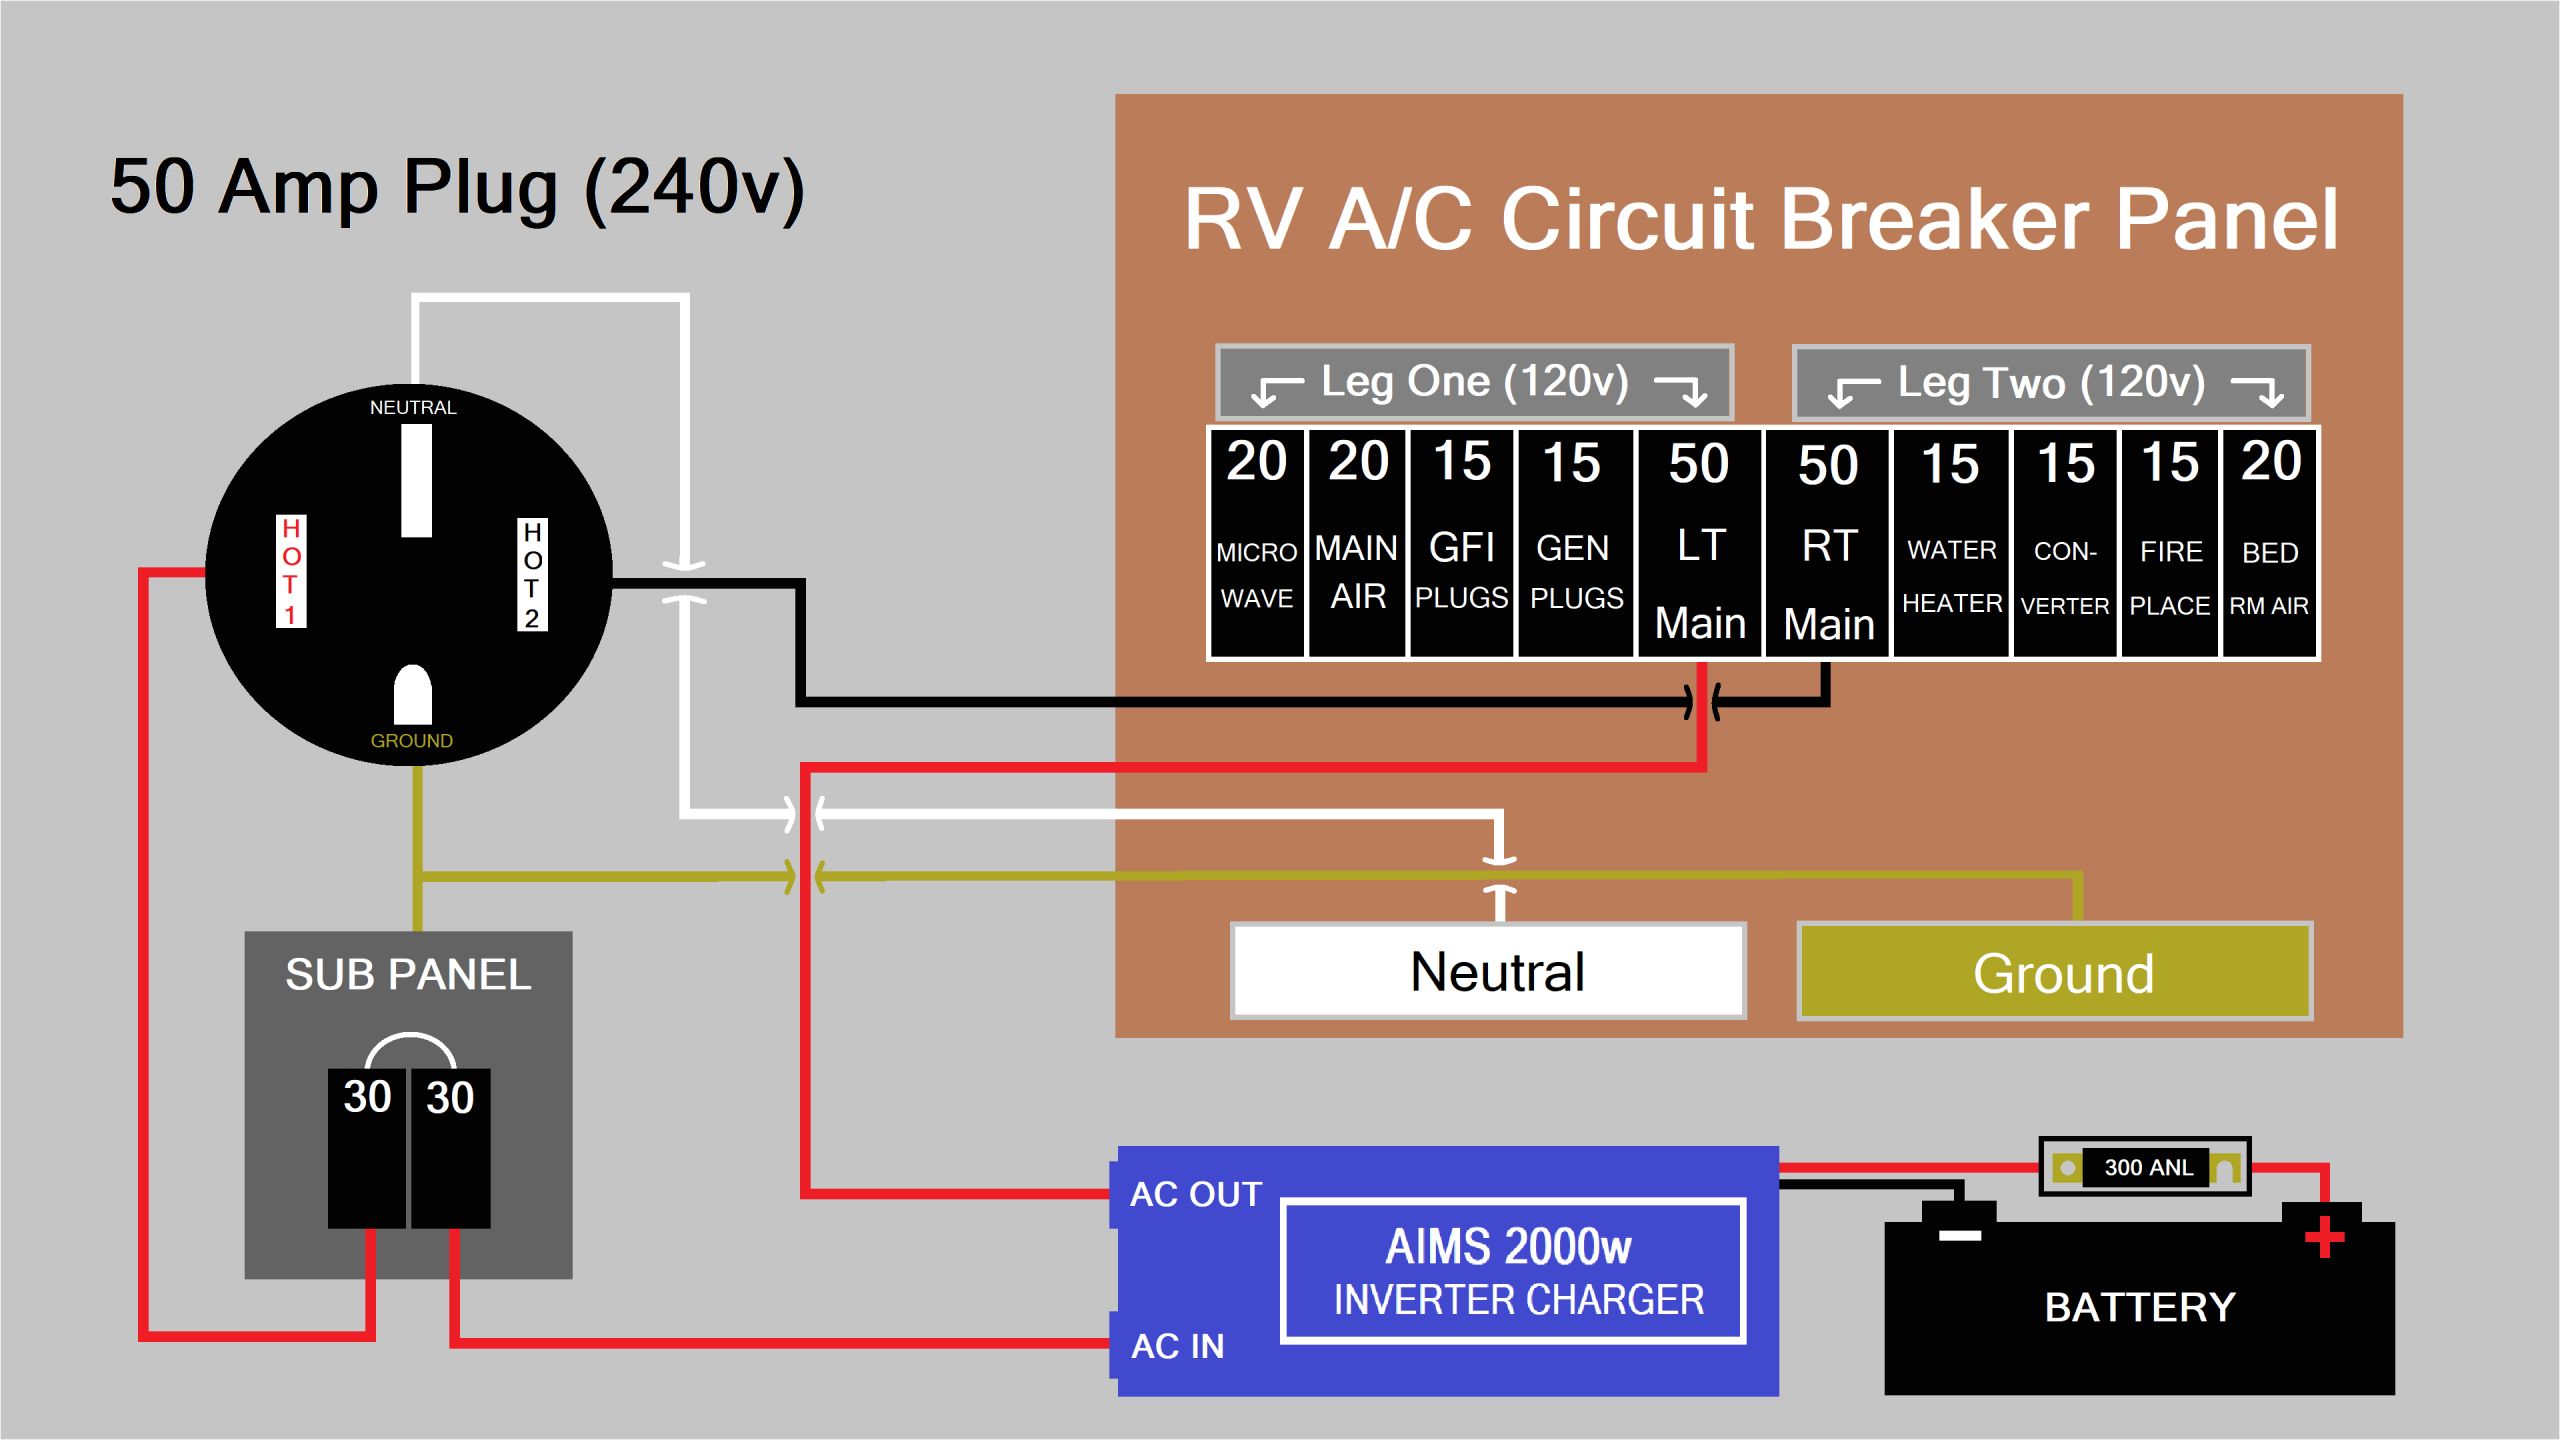 50 amp plug wiring diagram